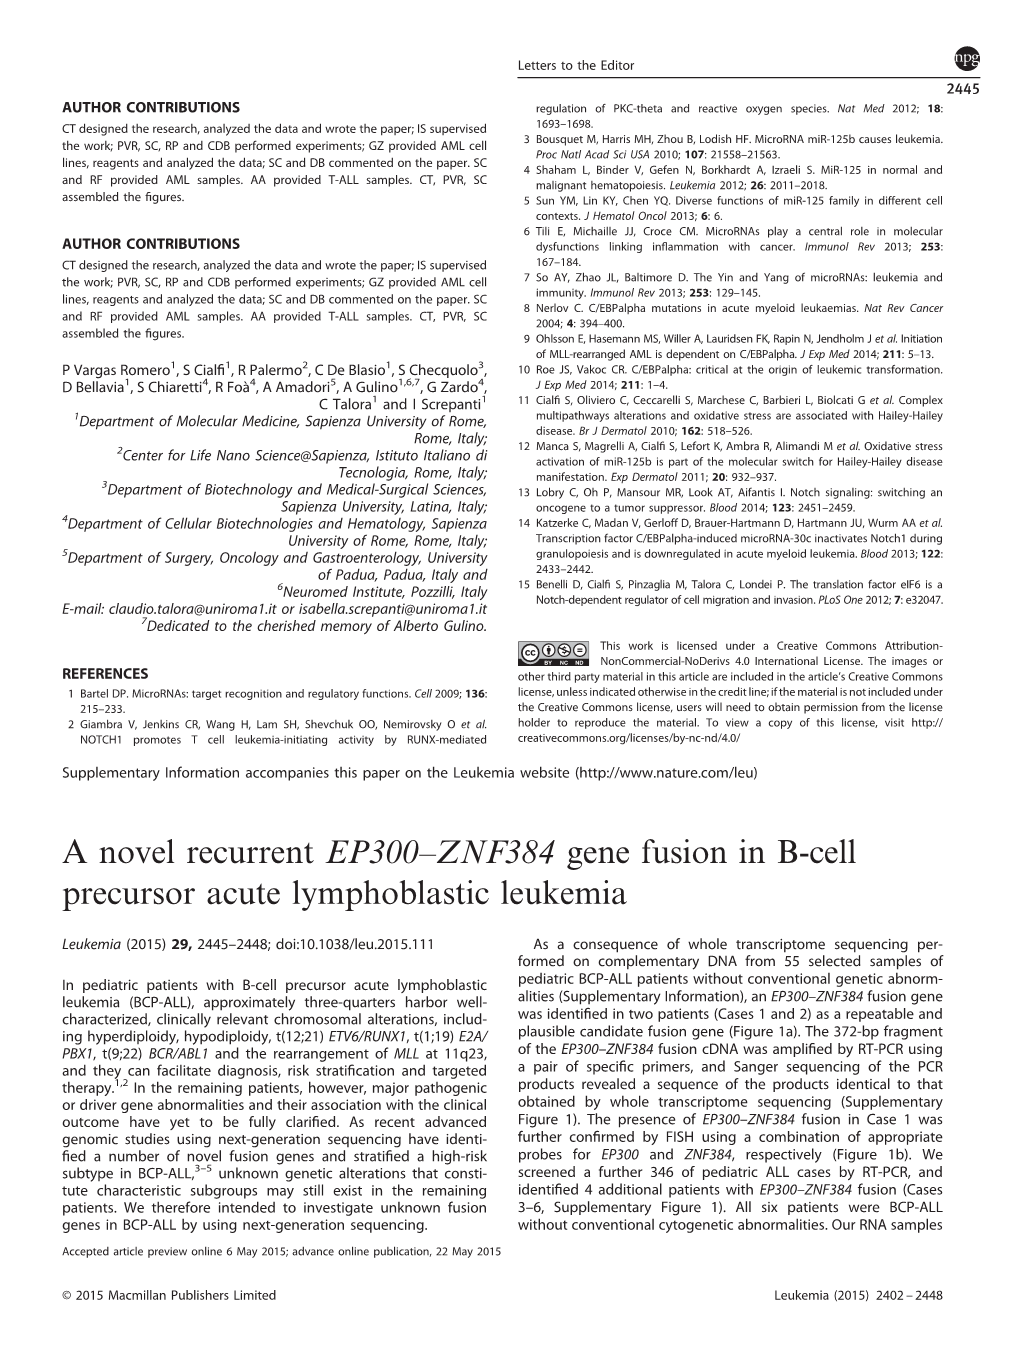 ZNF384 Gene Fusion in B-Cell Precursor Acute Lymphoblastic Leukemia